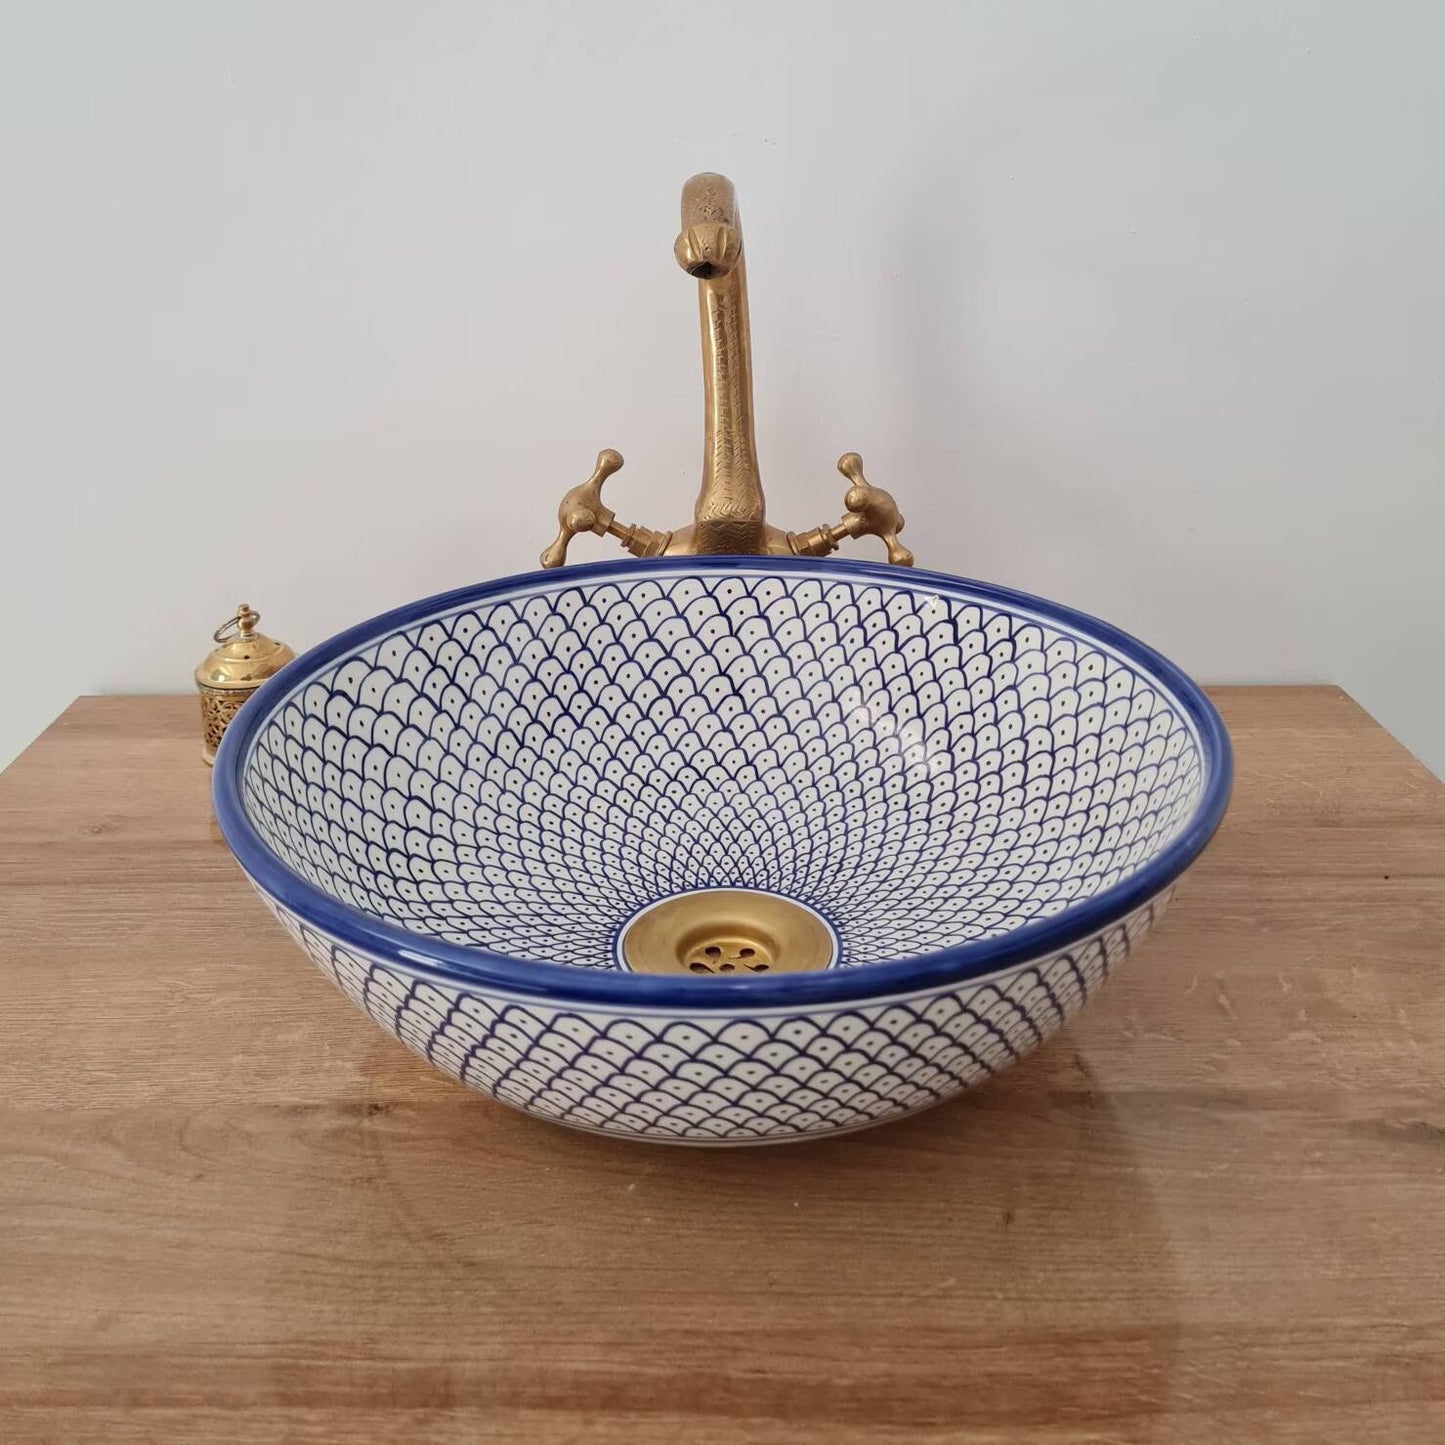 Moroccan sink | moroccan ceramic sink | bathroom sink | moroccan bathroom basin | moroccan sink bowl | Blue sink bowl #26